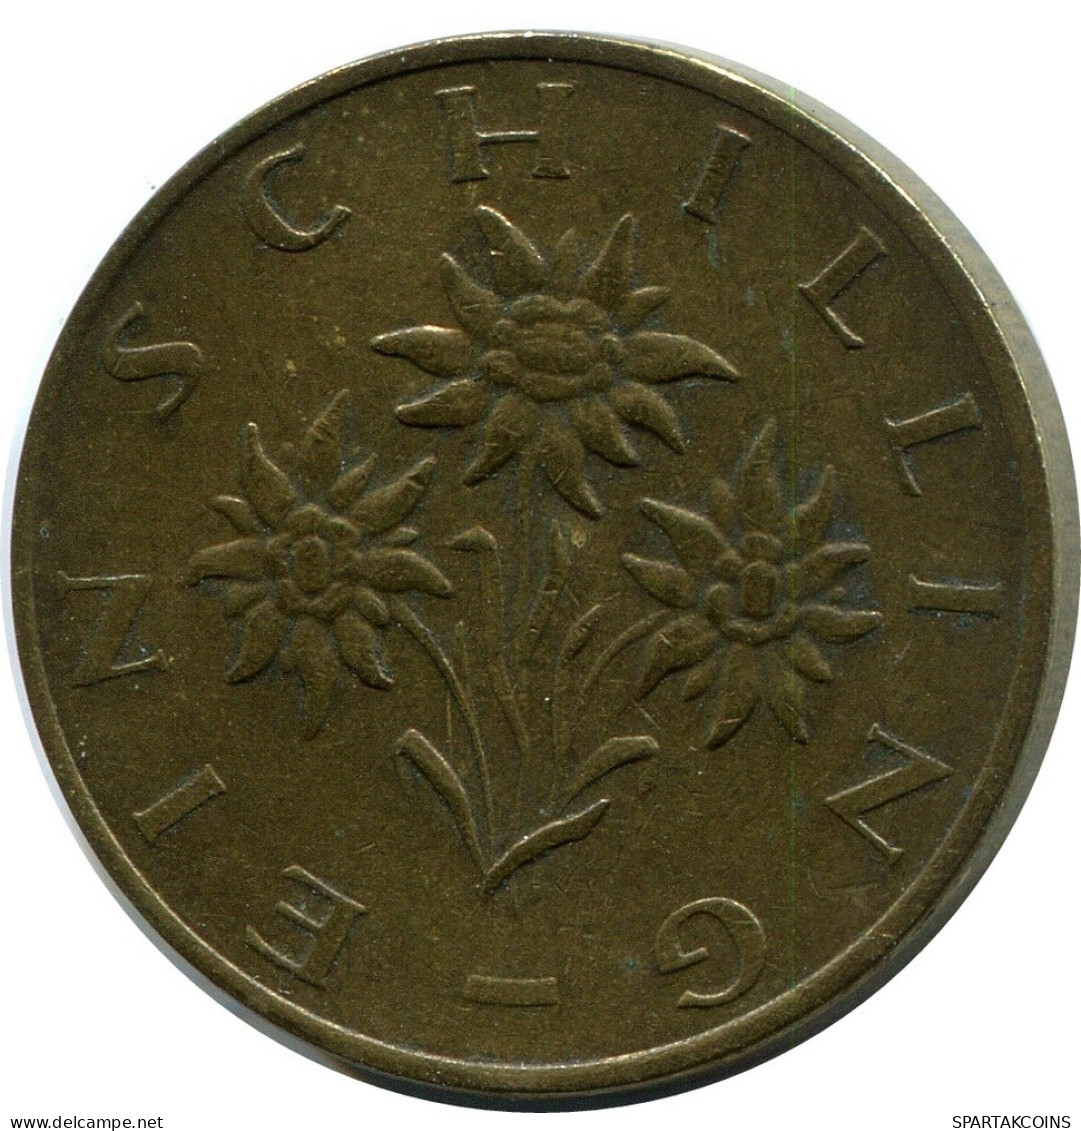 1 SCHILLING 1982 AUSTRIA Coin #AZ555.U.A - Austria